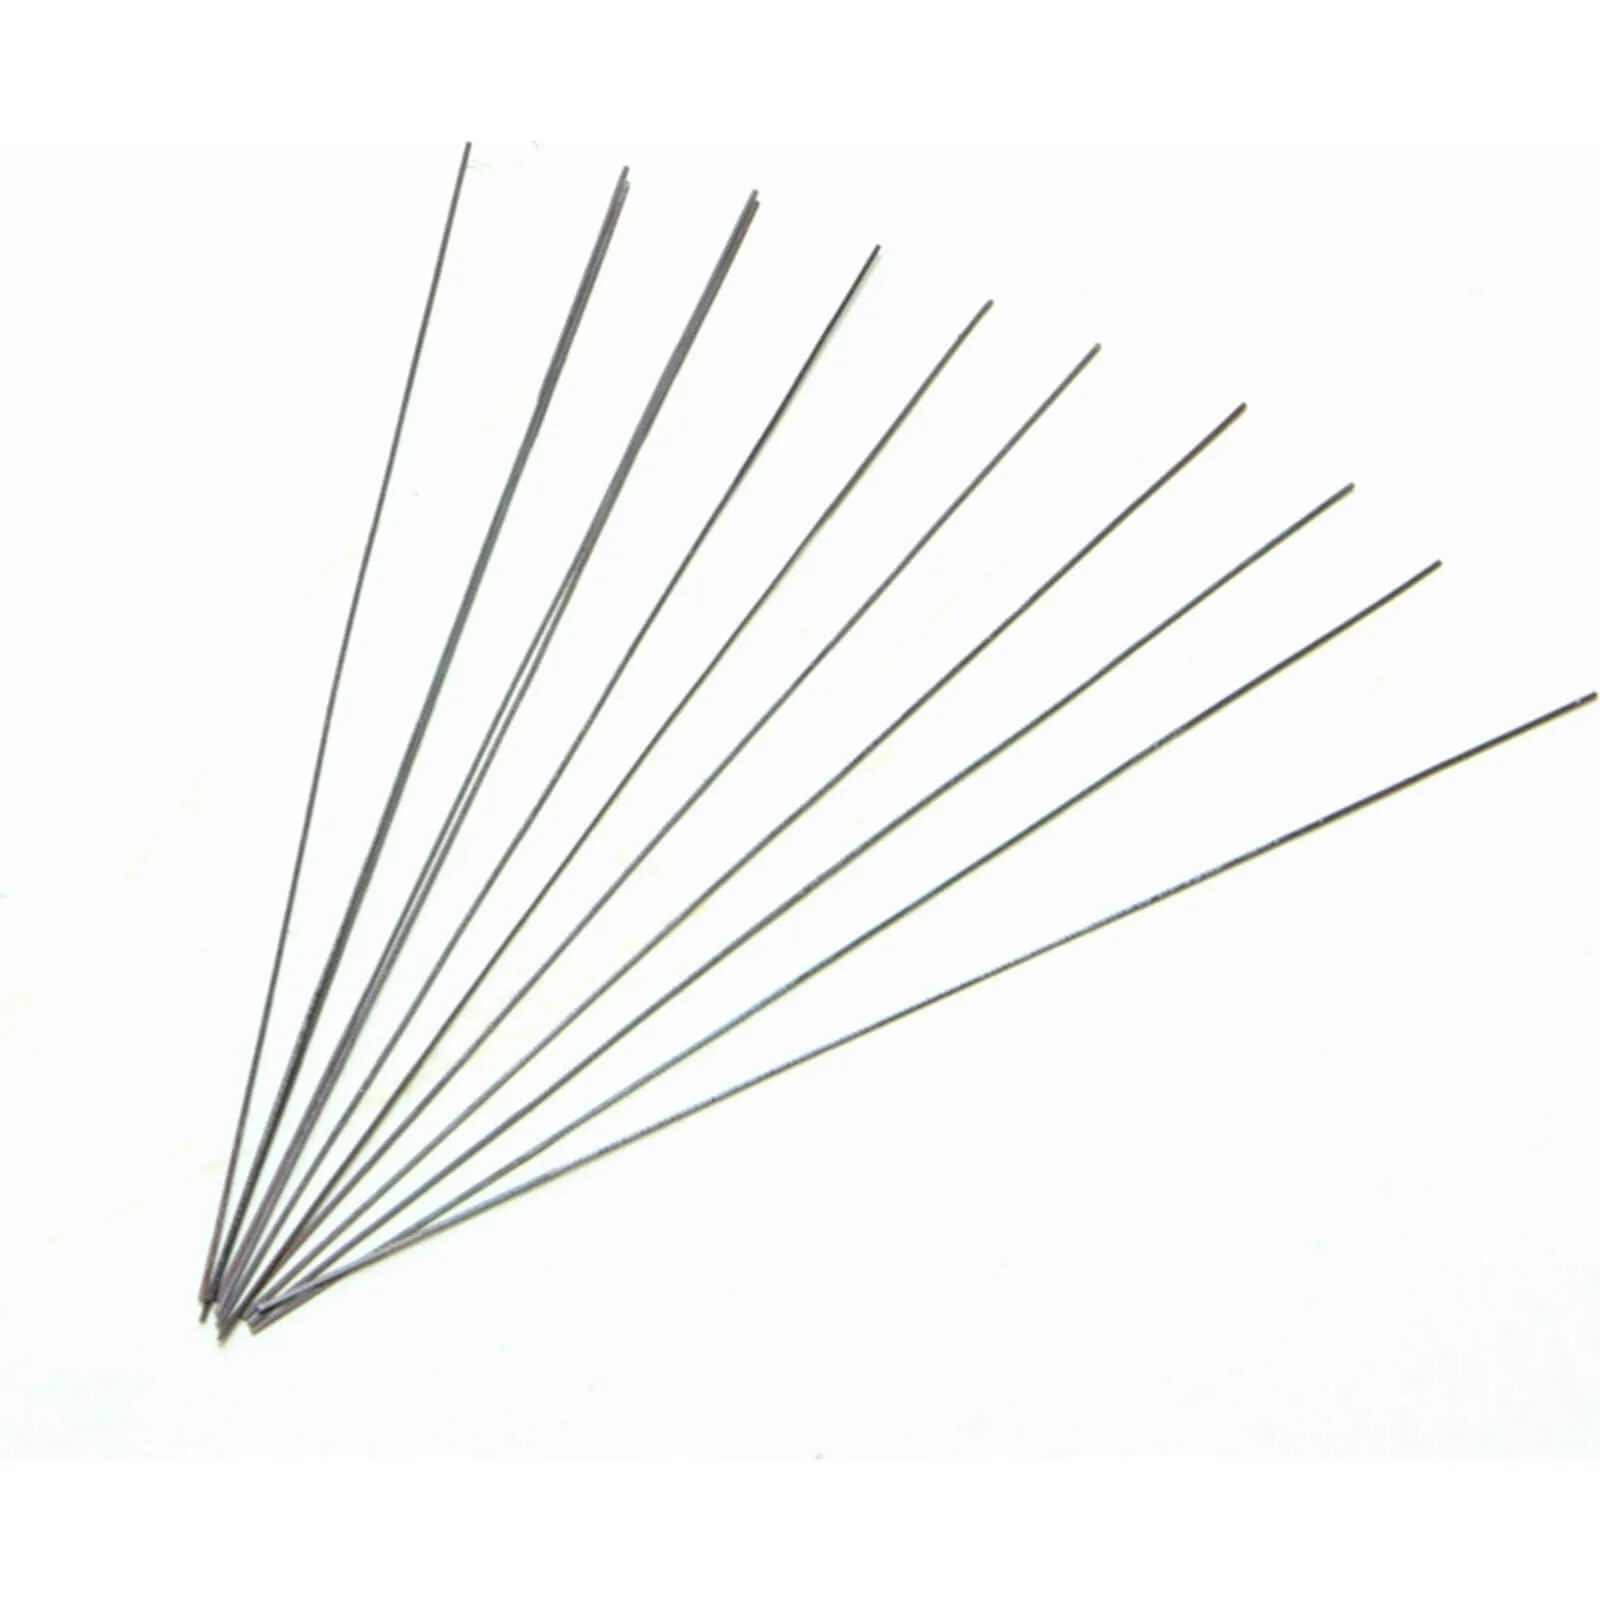 Faithfull Piercing Saw Blades - 5" / 125mm, 42tpi, Pack of 12